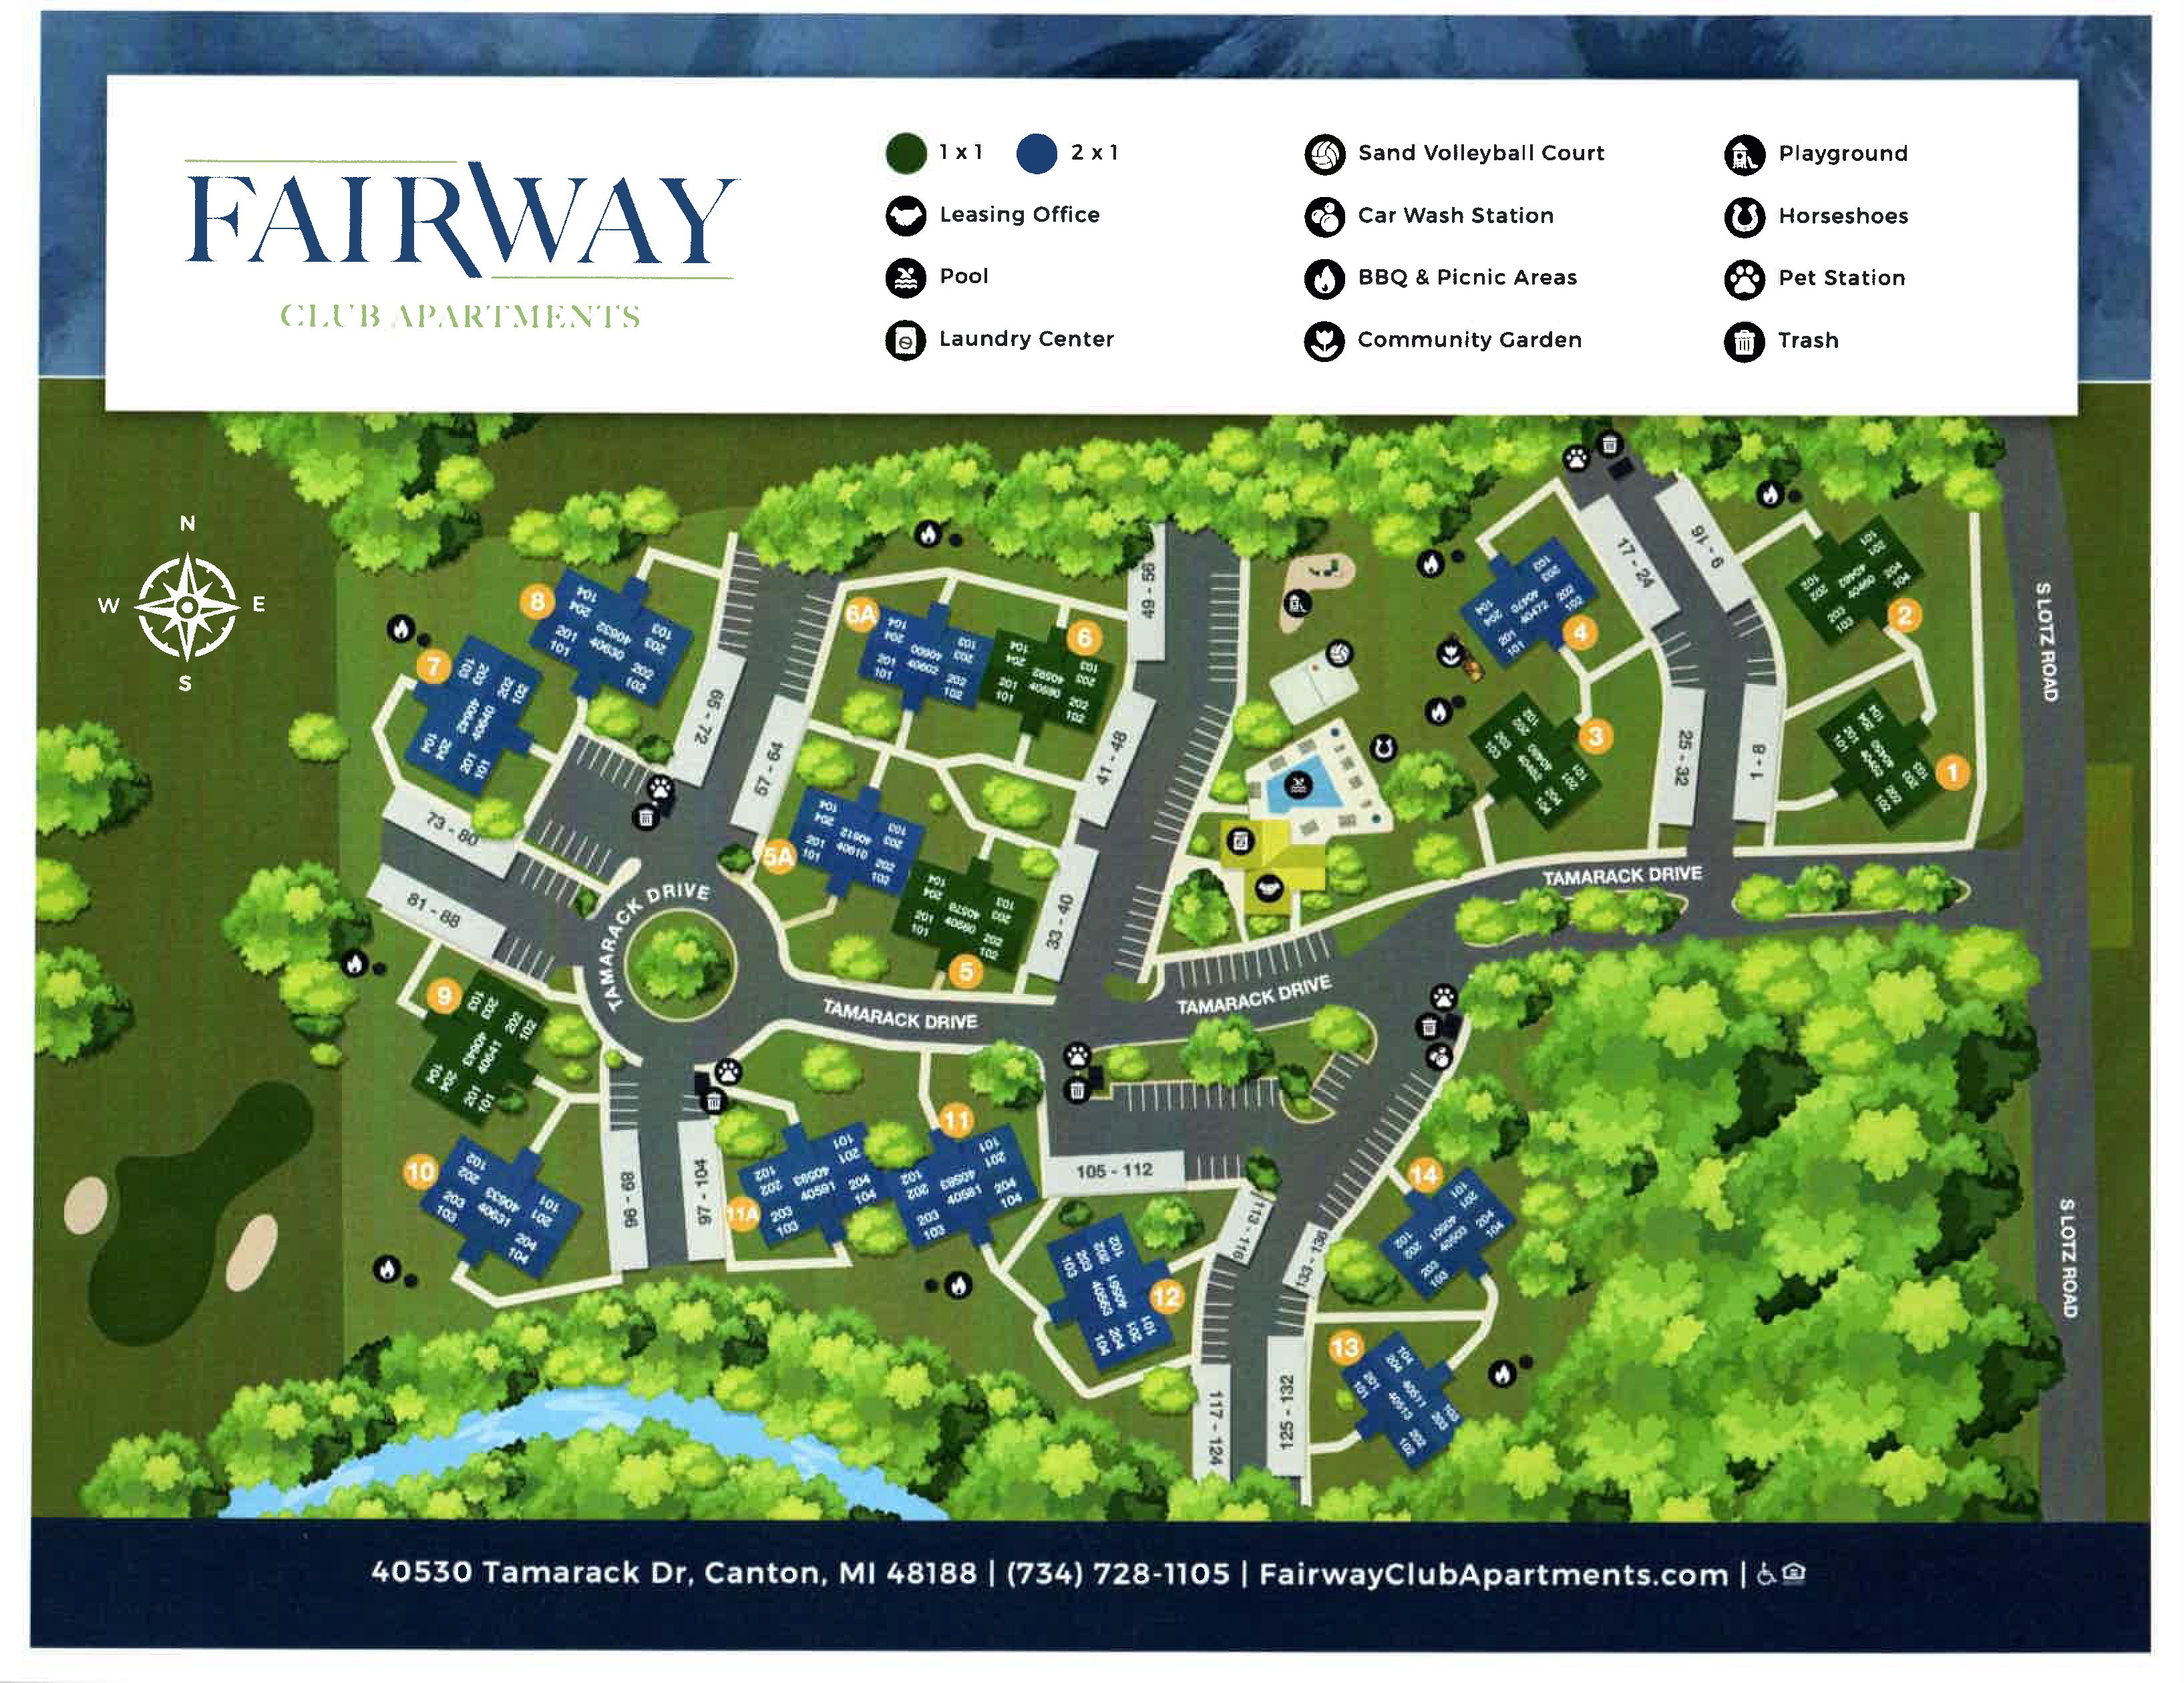 fairway club apartments site map